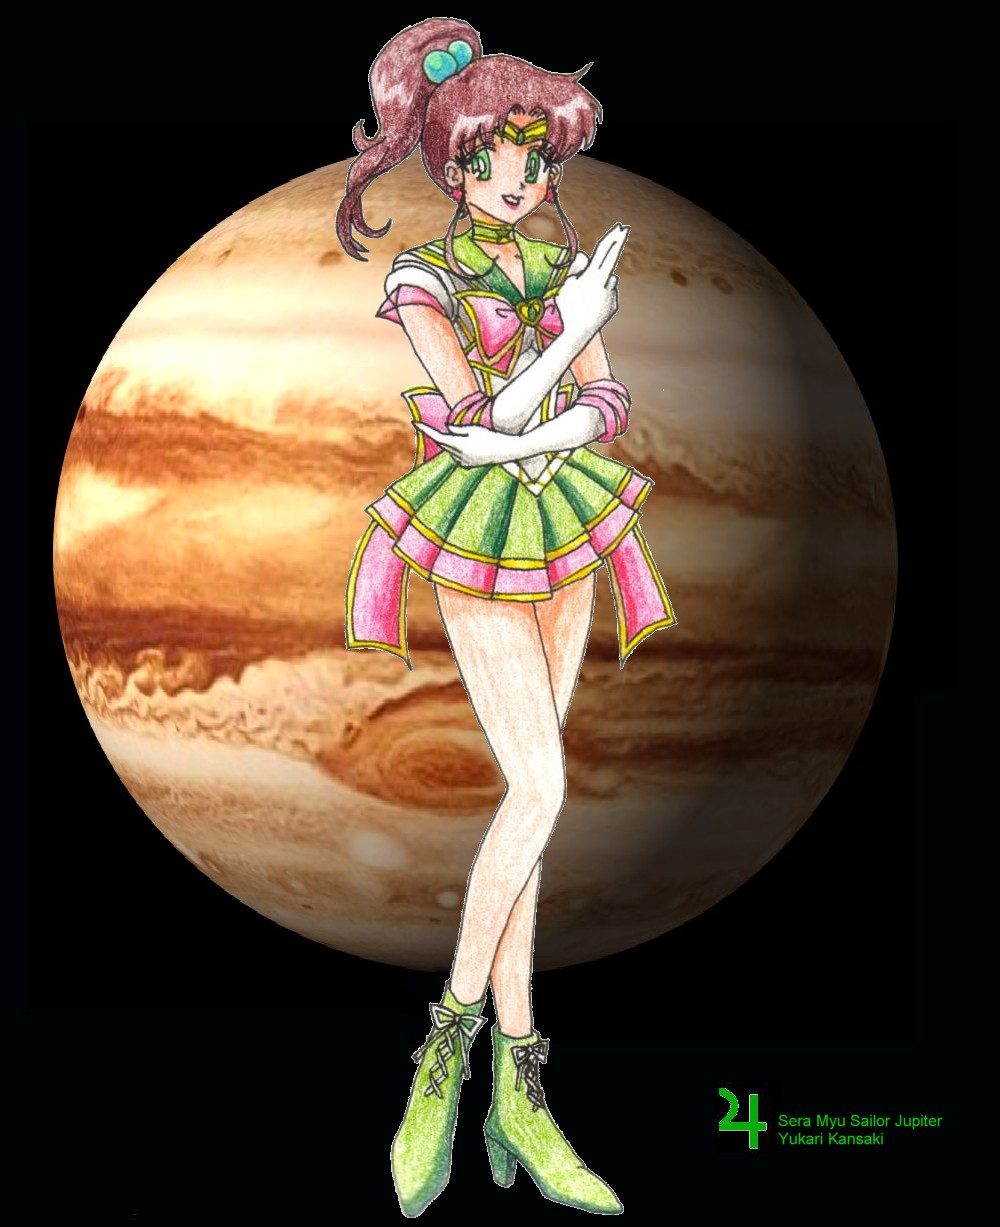 Sera Myu Sailor Jupiter